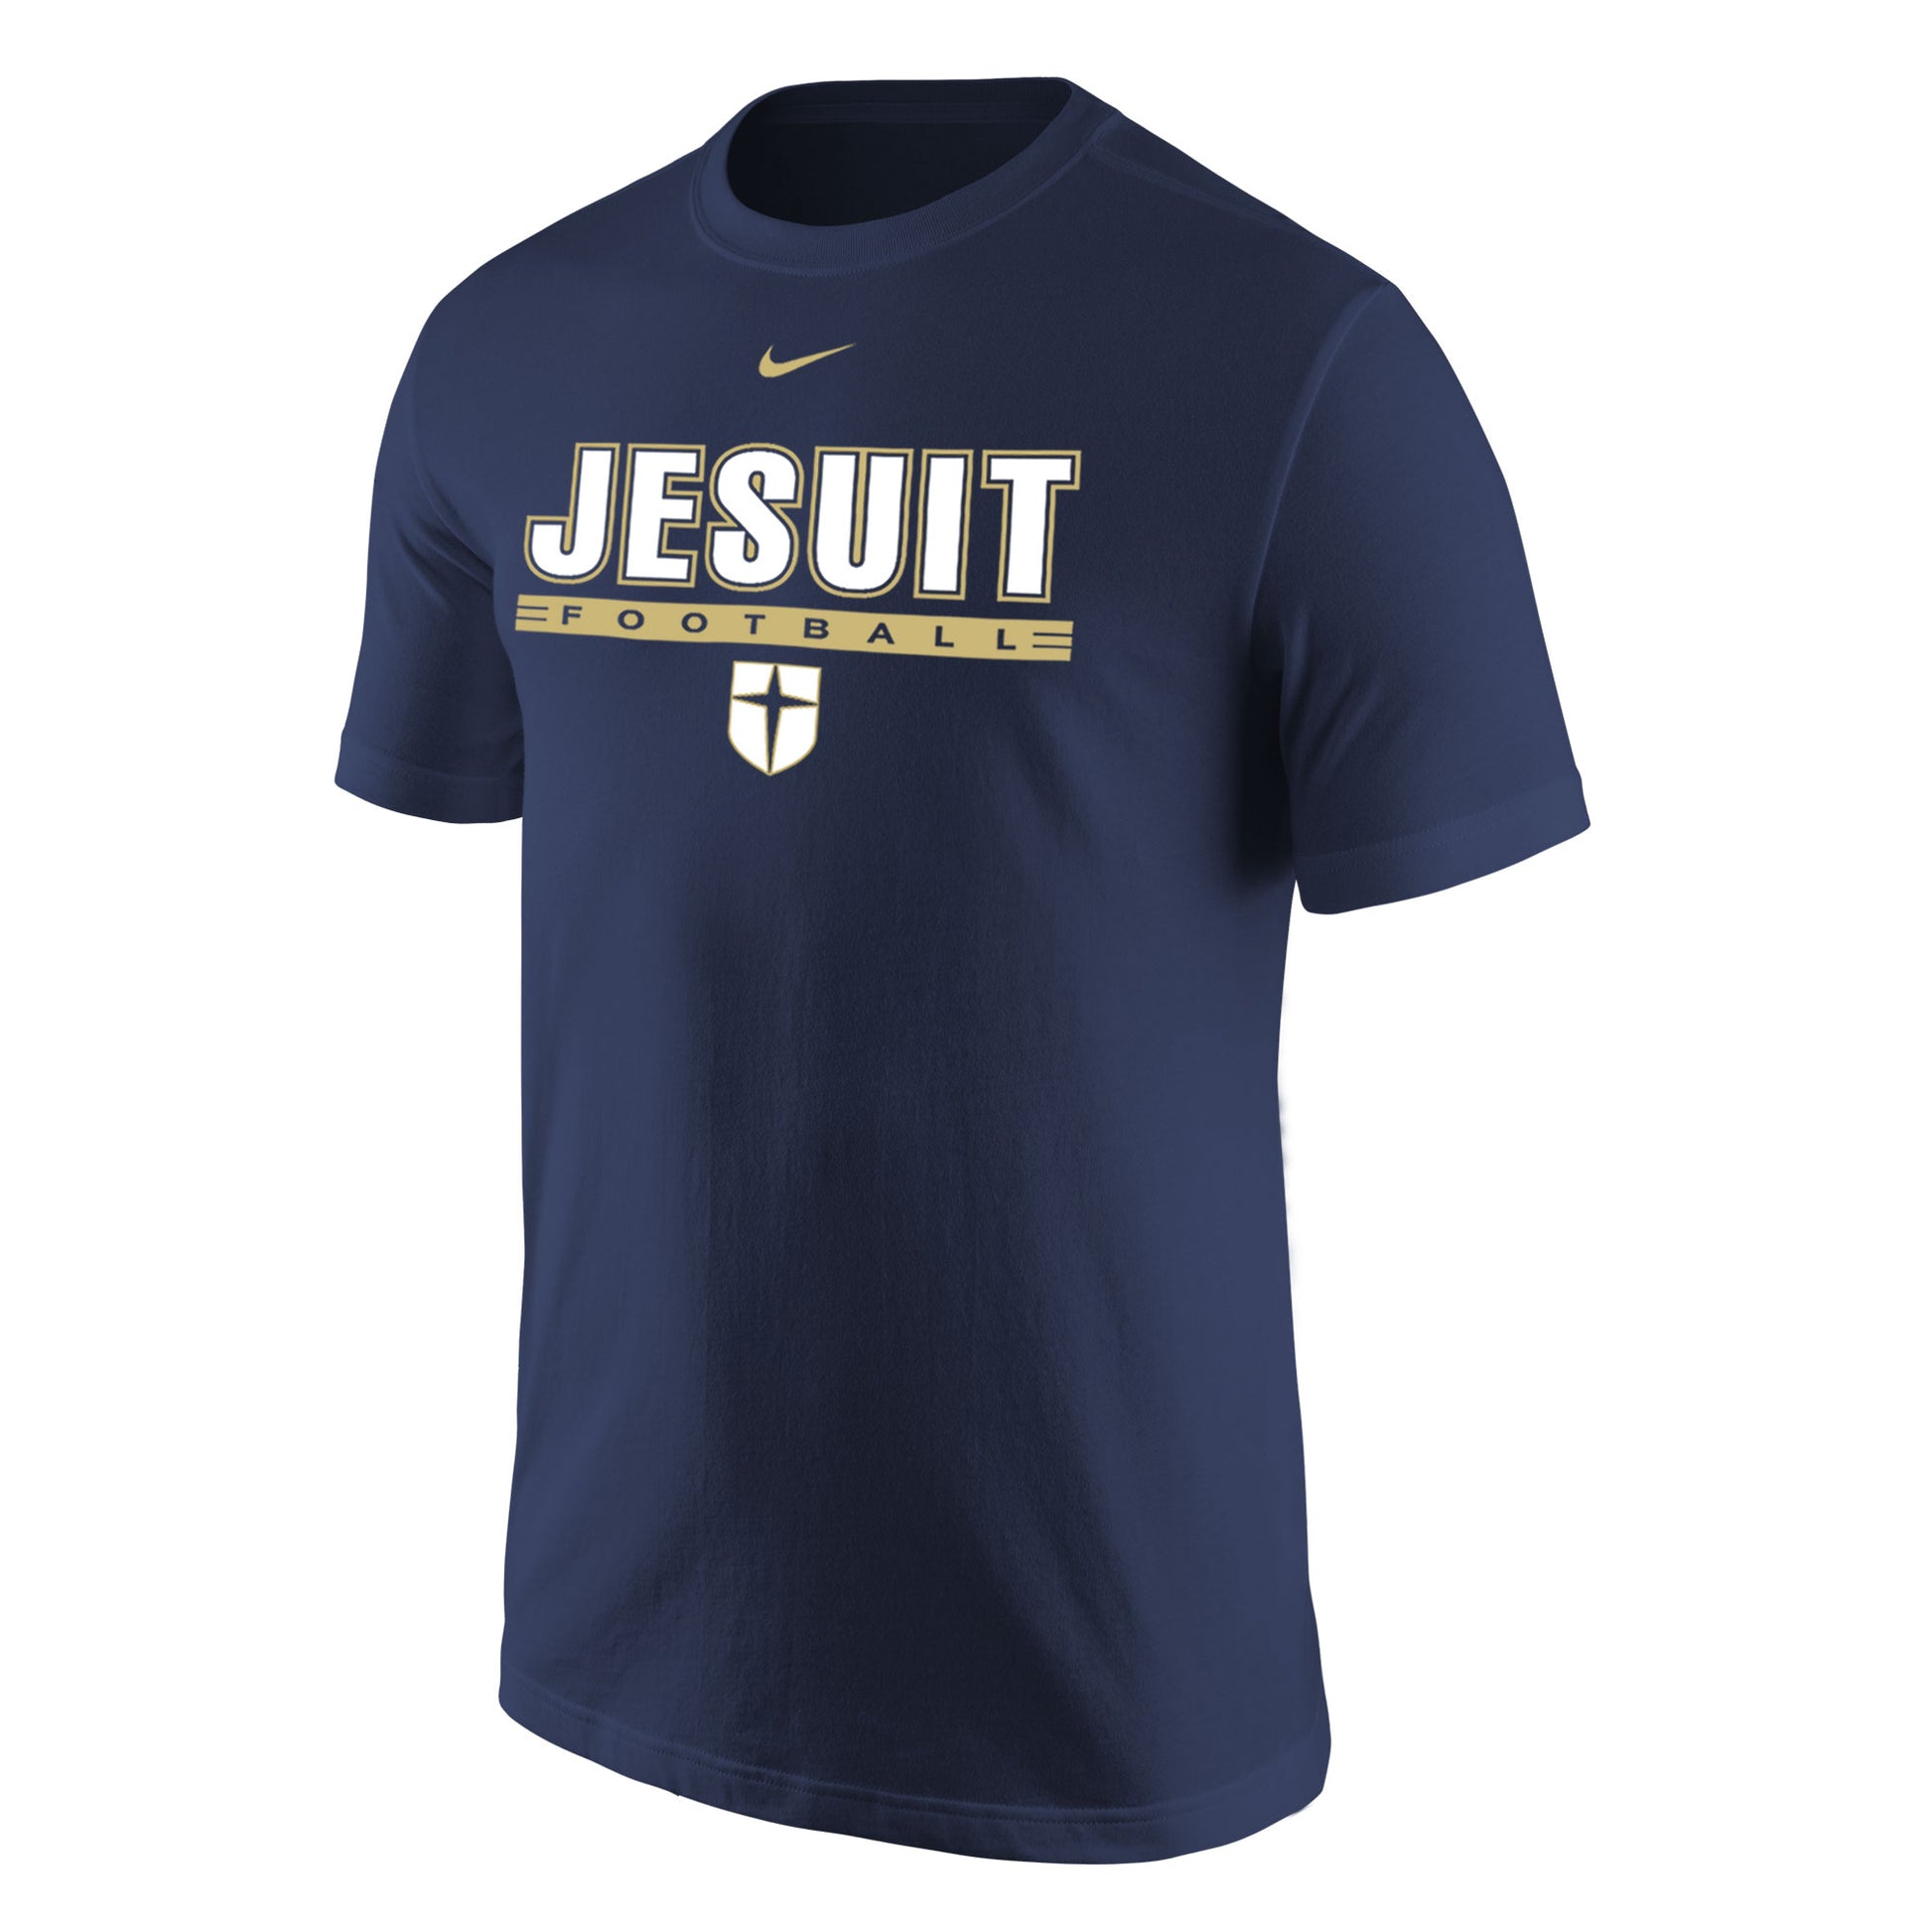 T-Shirt Connection Ranger Specific Sports Nike Jesuit Dallas –